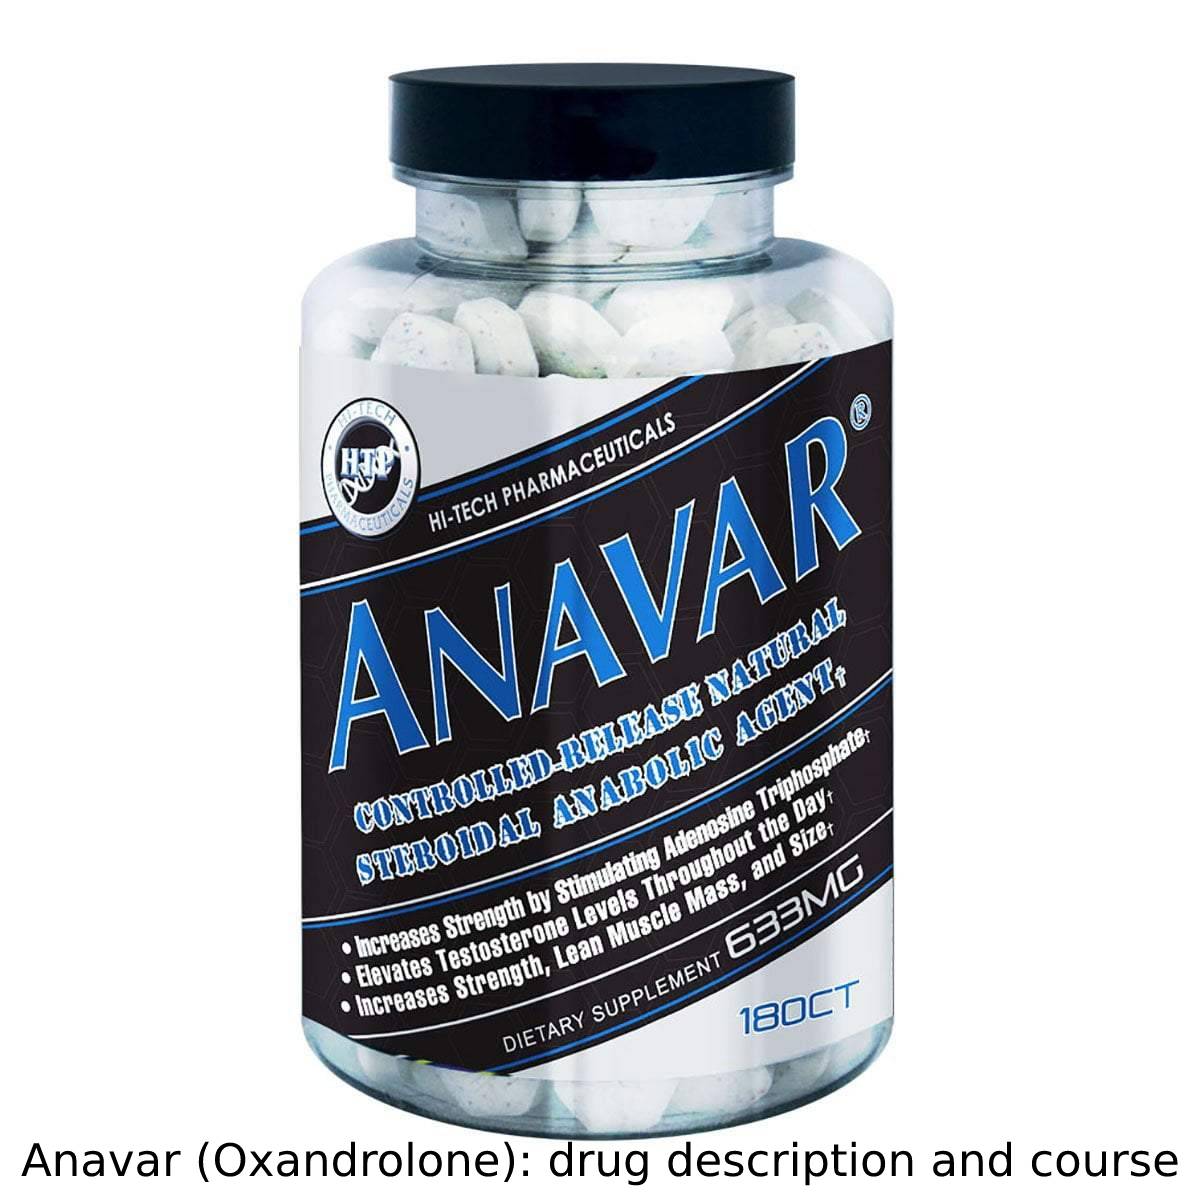 Anavar (Oxandrolone): drug description and course